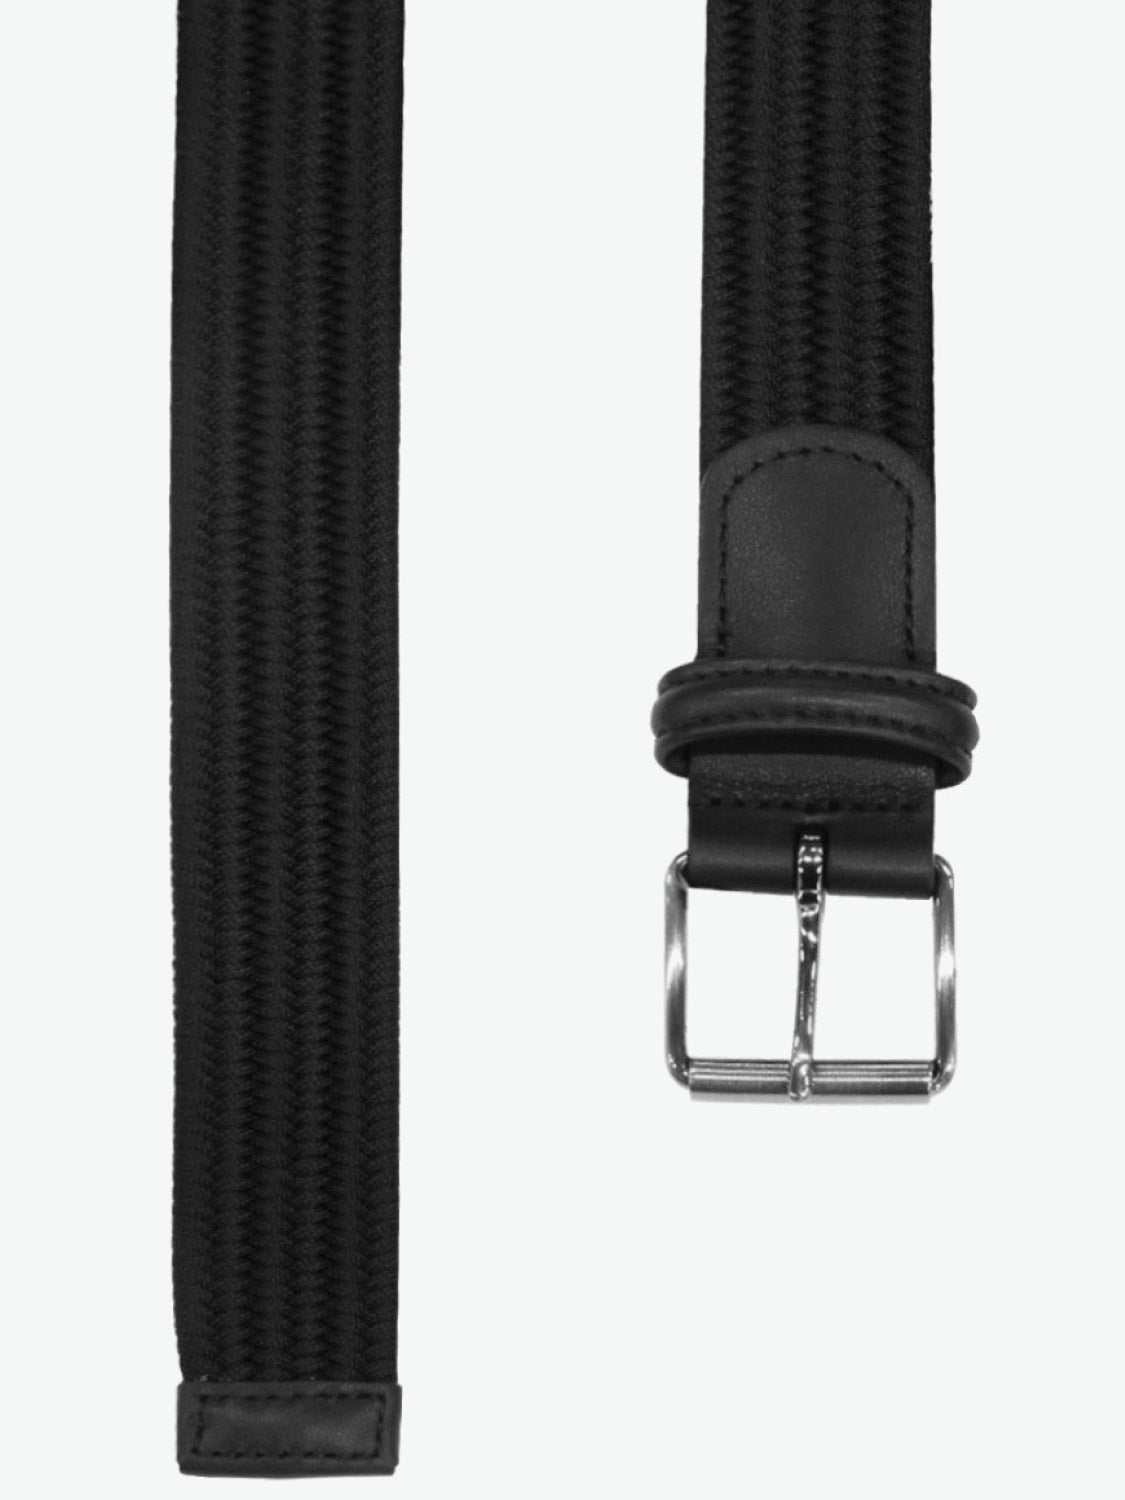 Anderson's Belt Leather-Trimmed Woven Slim Black